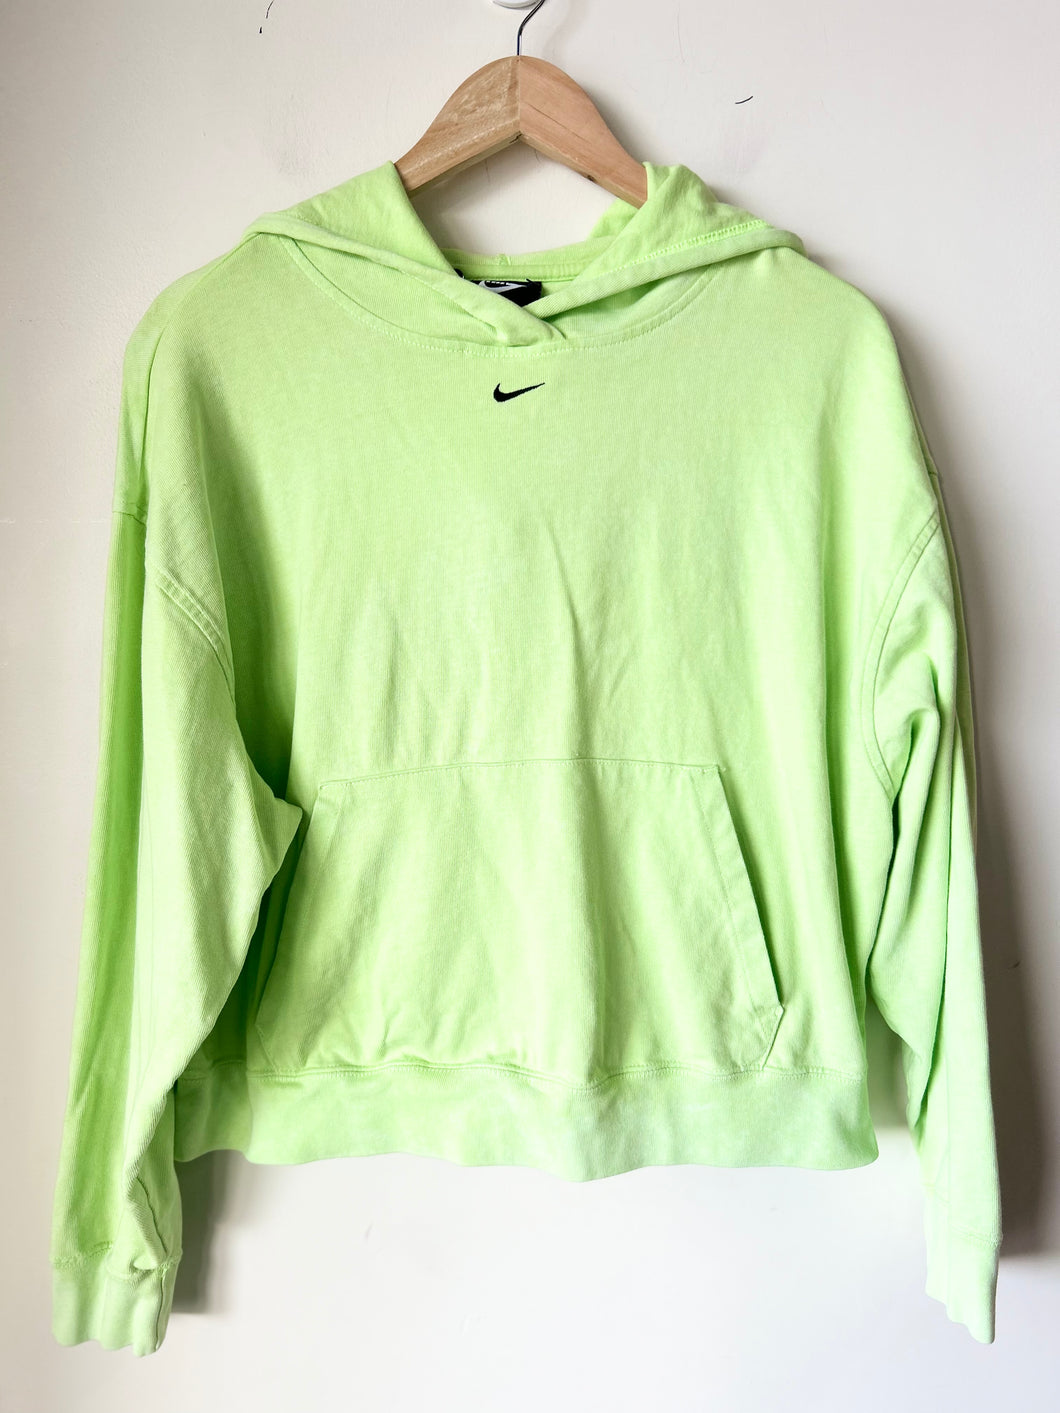 Nike Sweatshirt Size Small